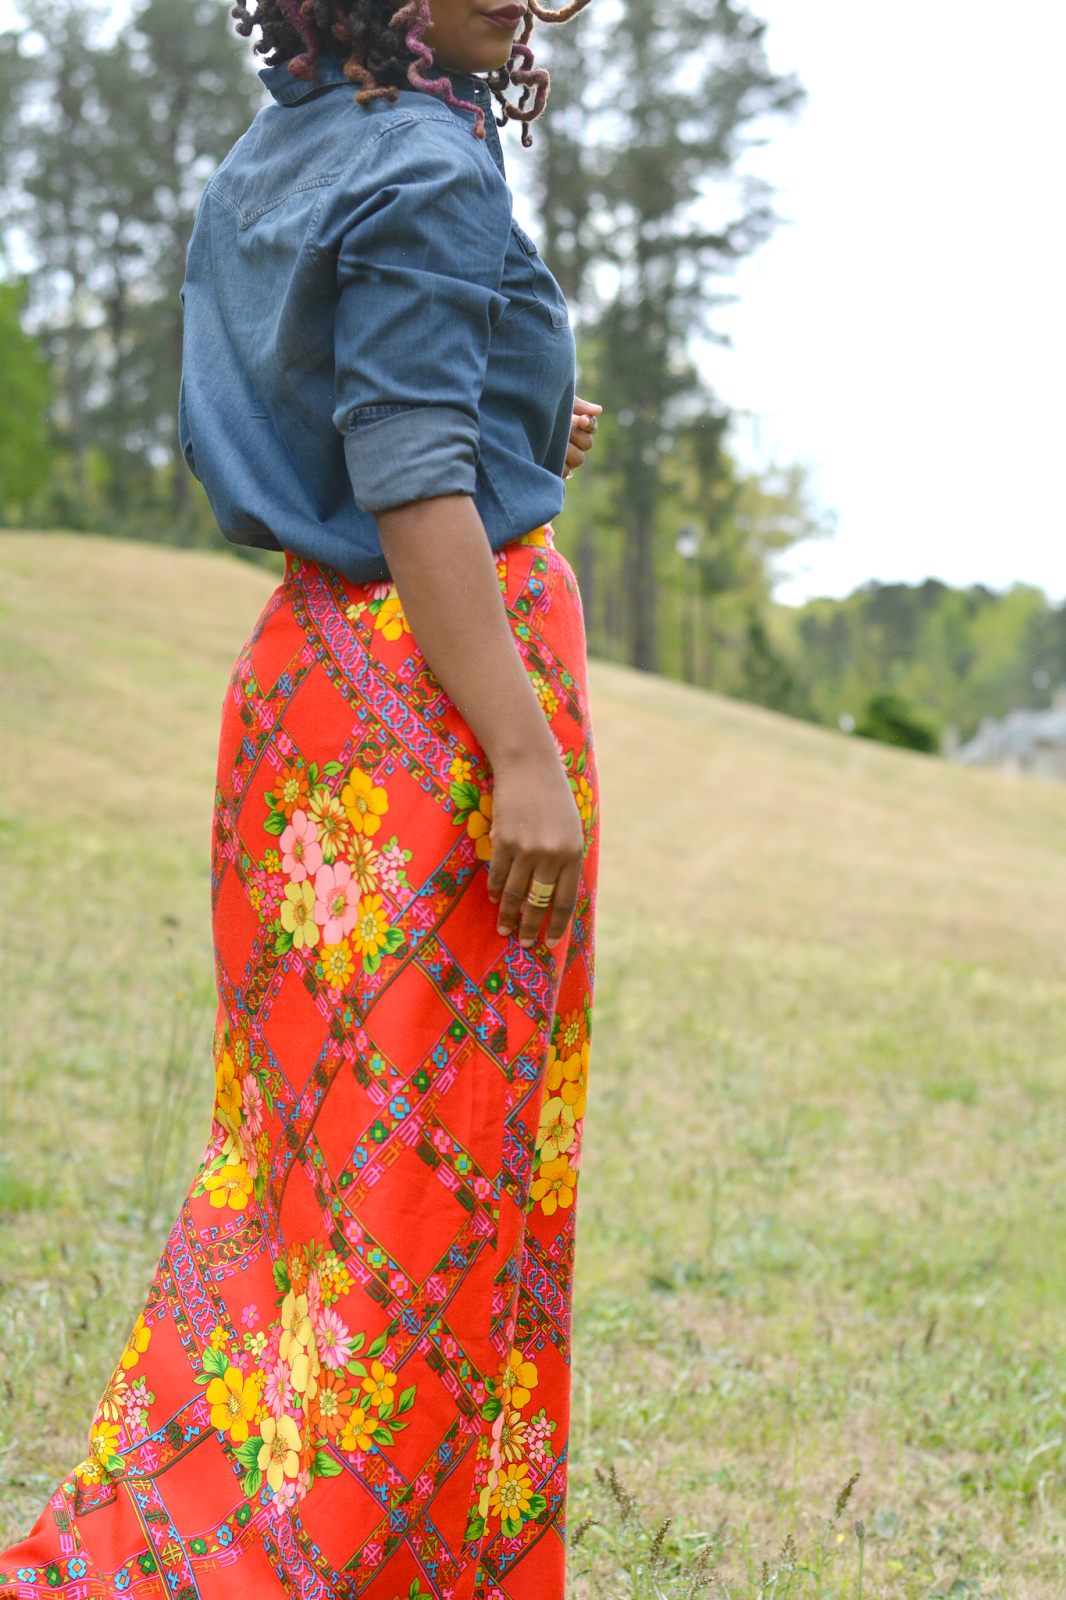 denim shirt worn with vintage floral maxi skirt